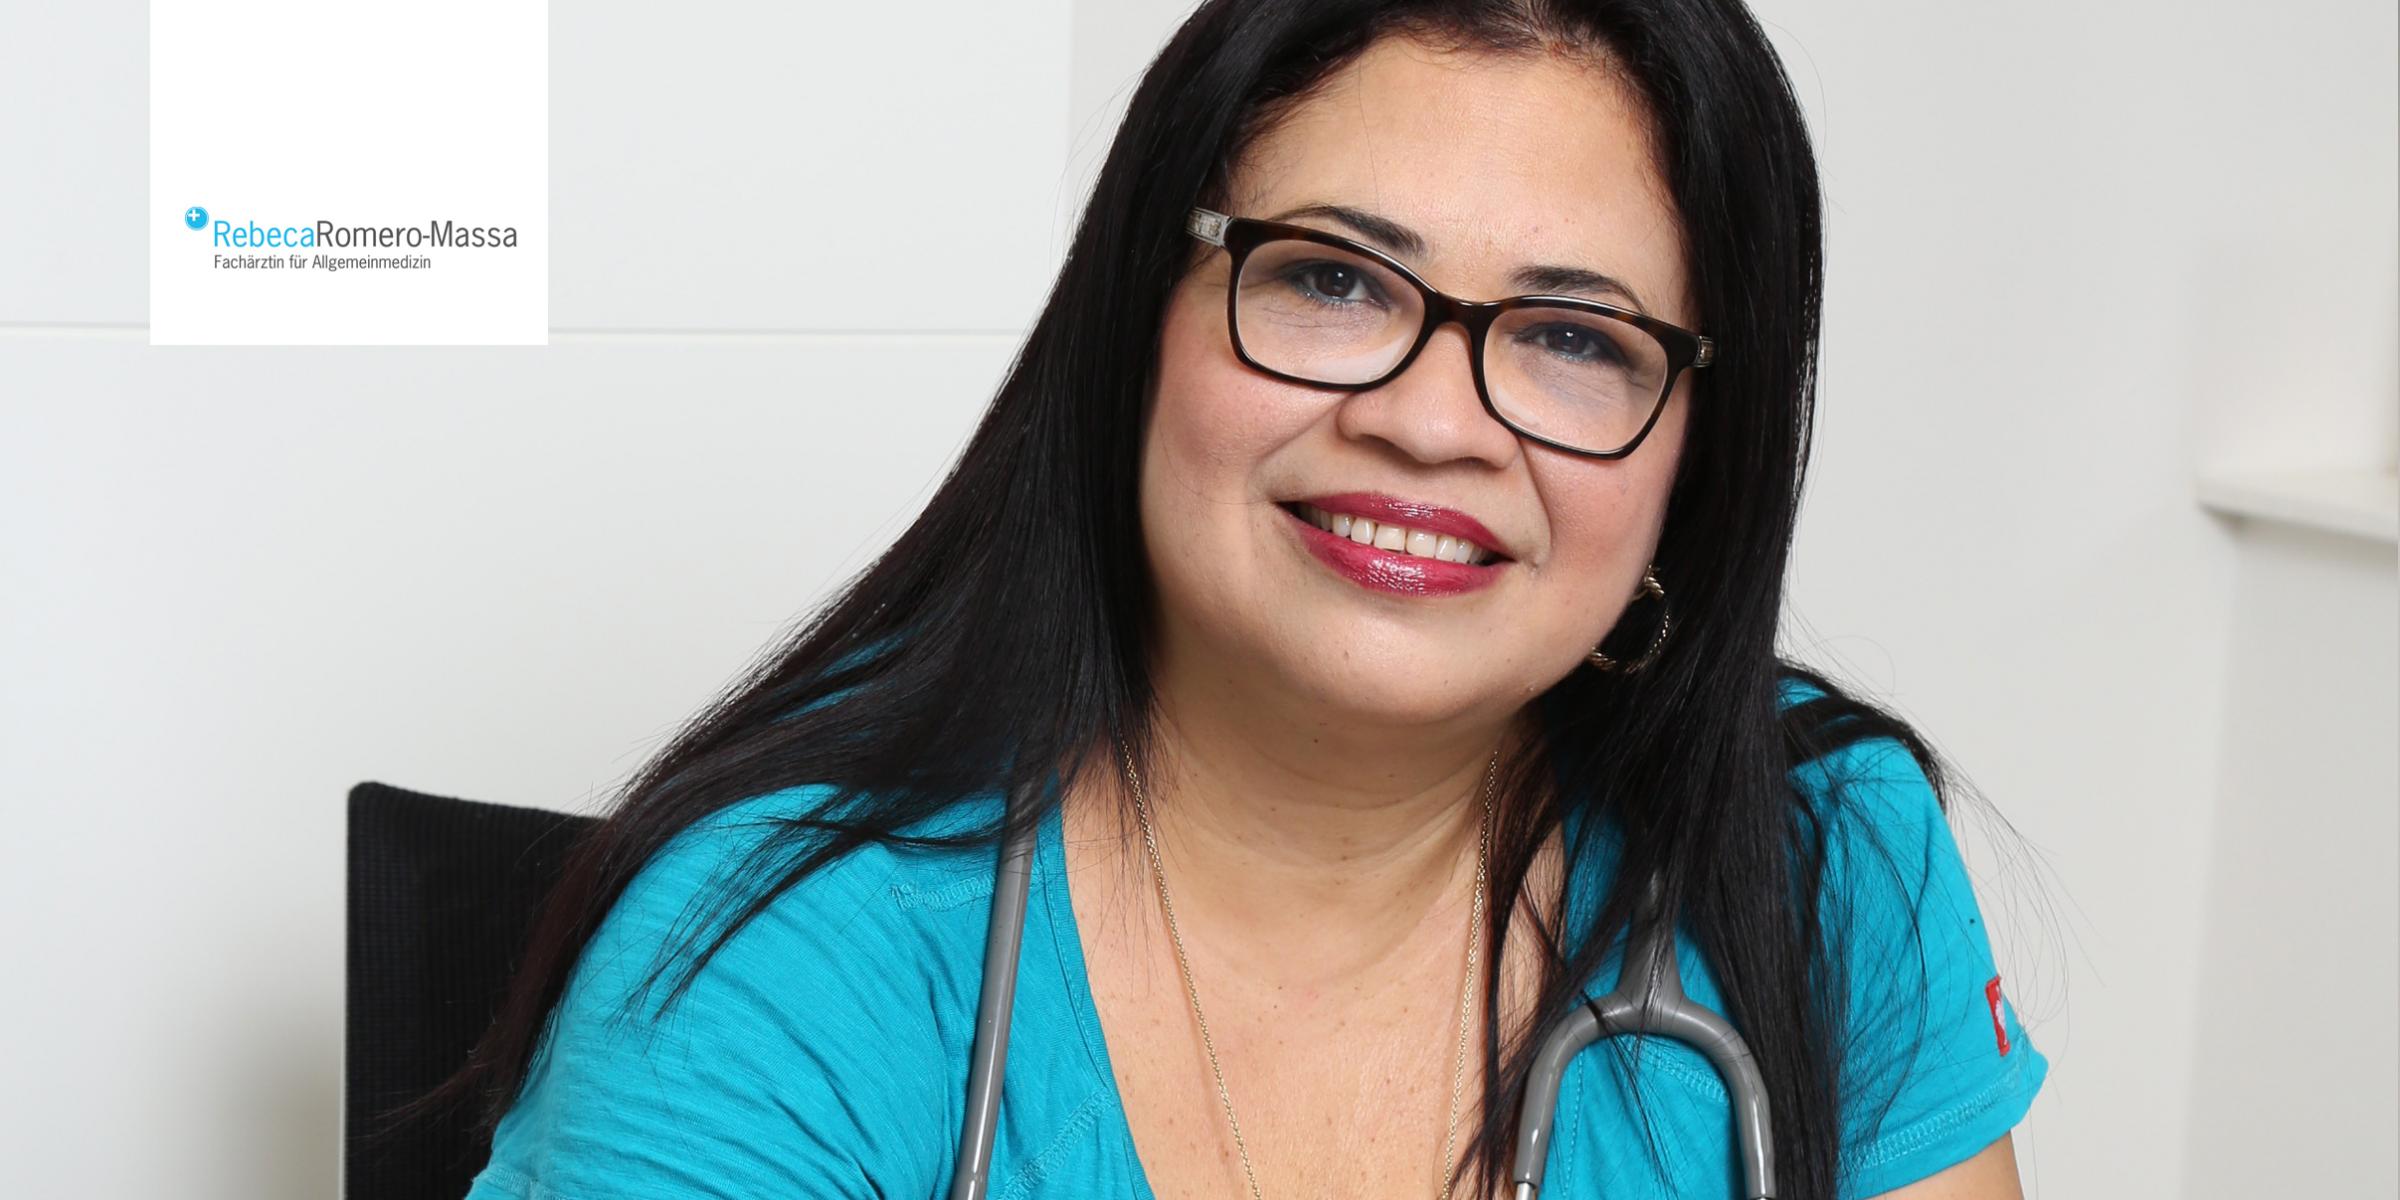  Hausarztpraxis Rebeca Romero-Massa